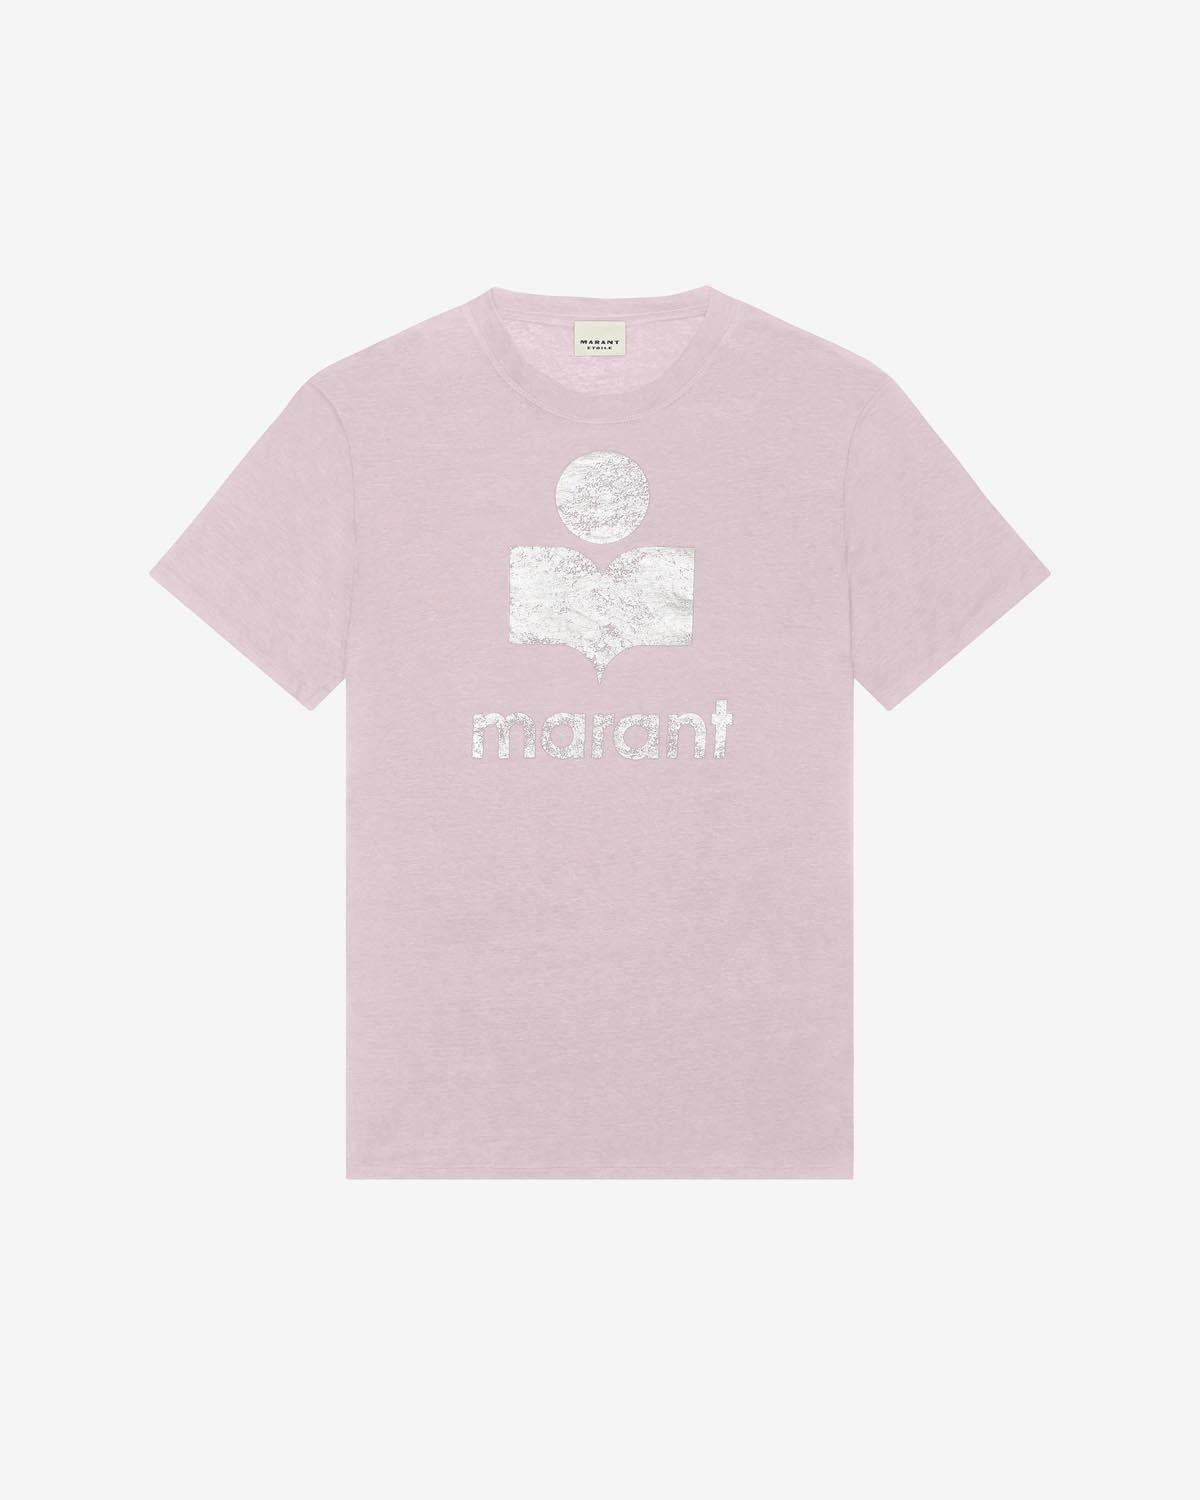 Zewel ロゴ tシャツ Woman Pearl rose-silver 7